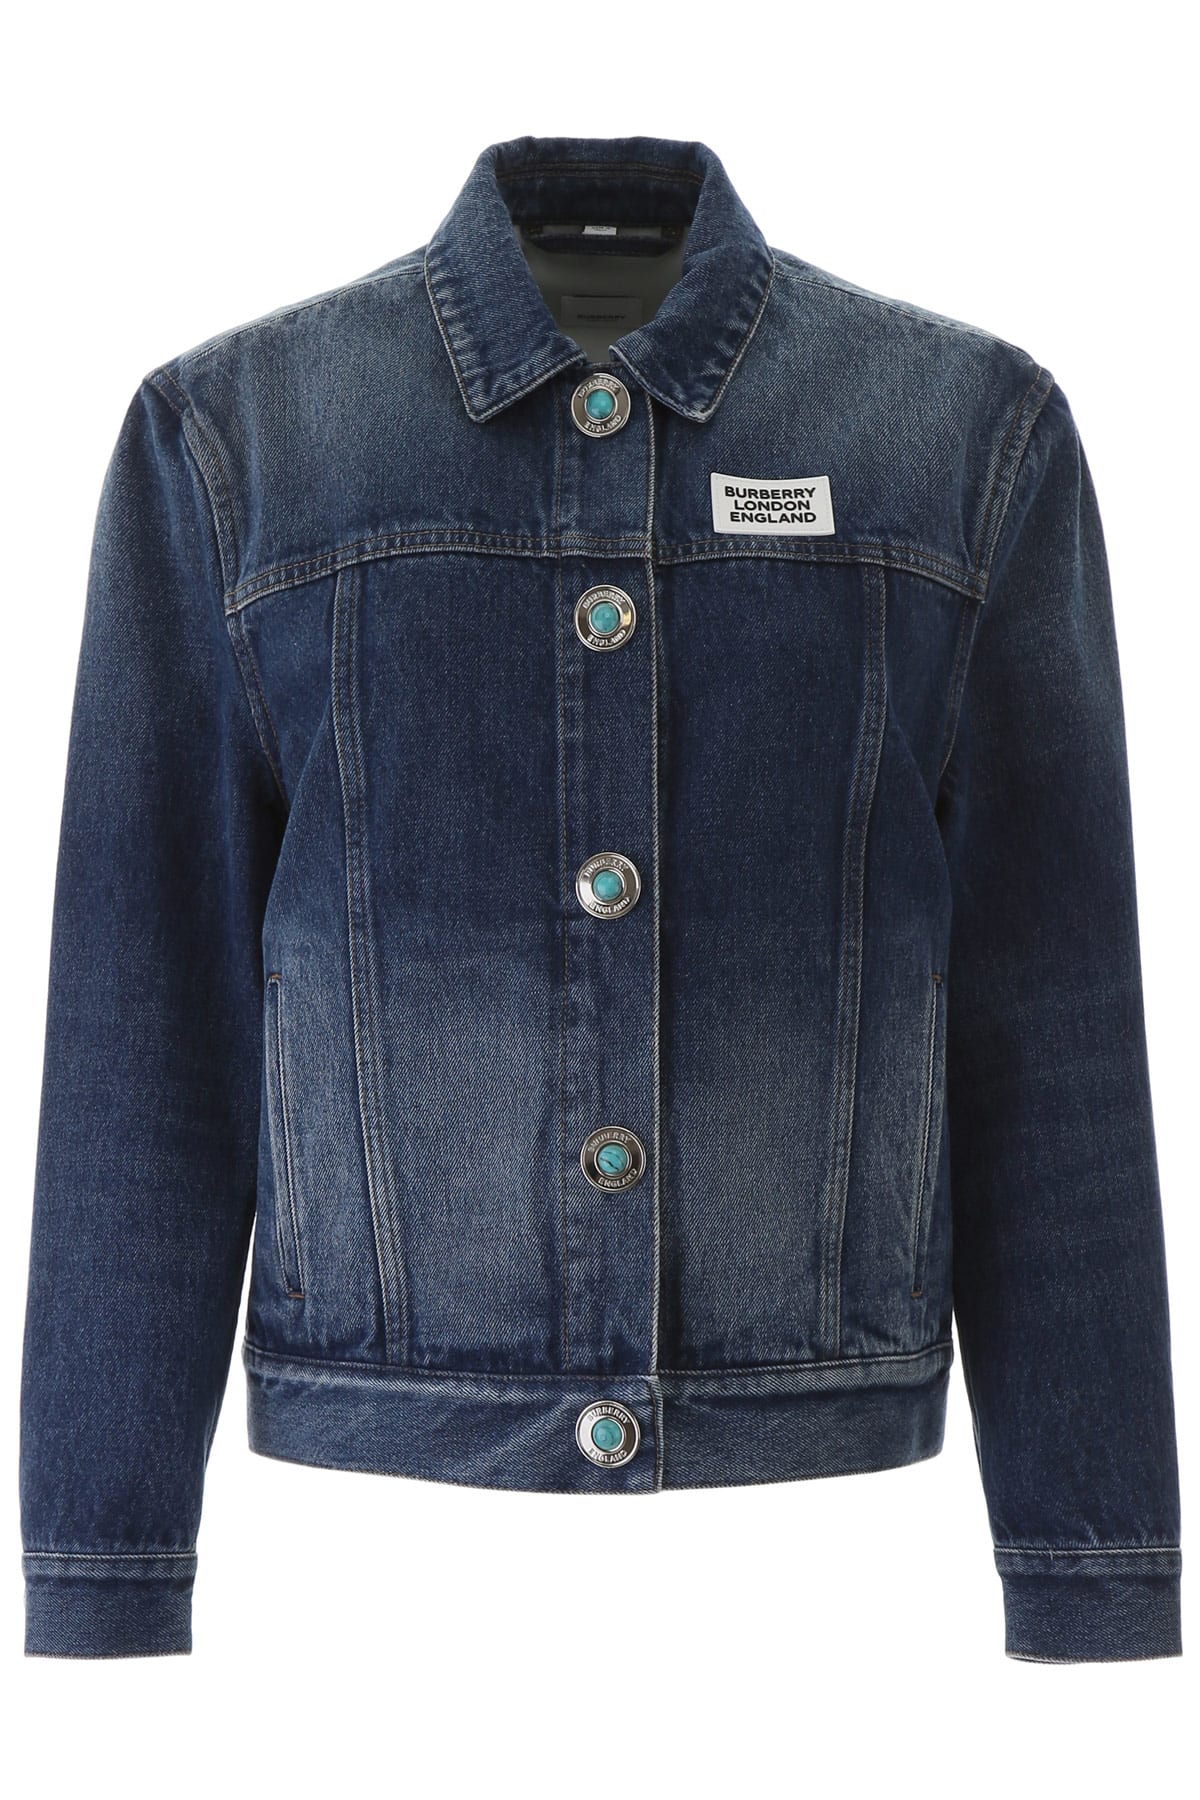 Photo of  Burberry Yvonne Jacket- shop Burberry jackets online sales